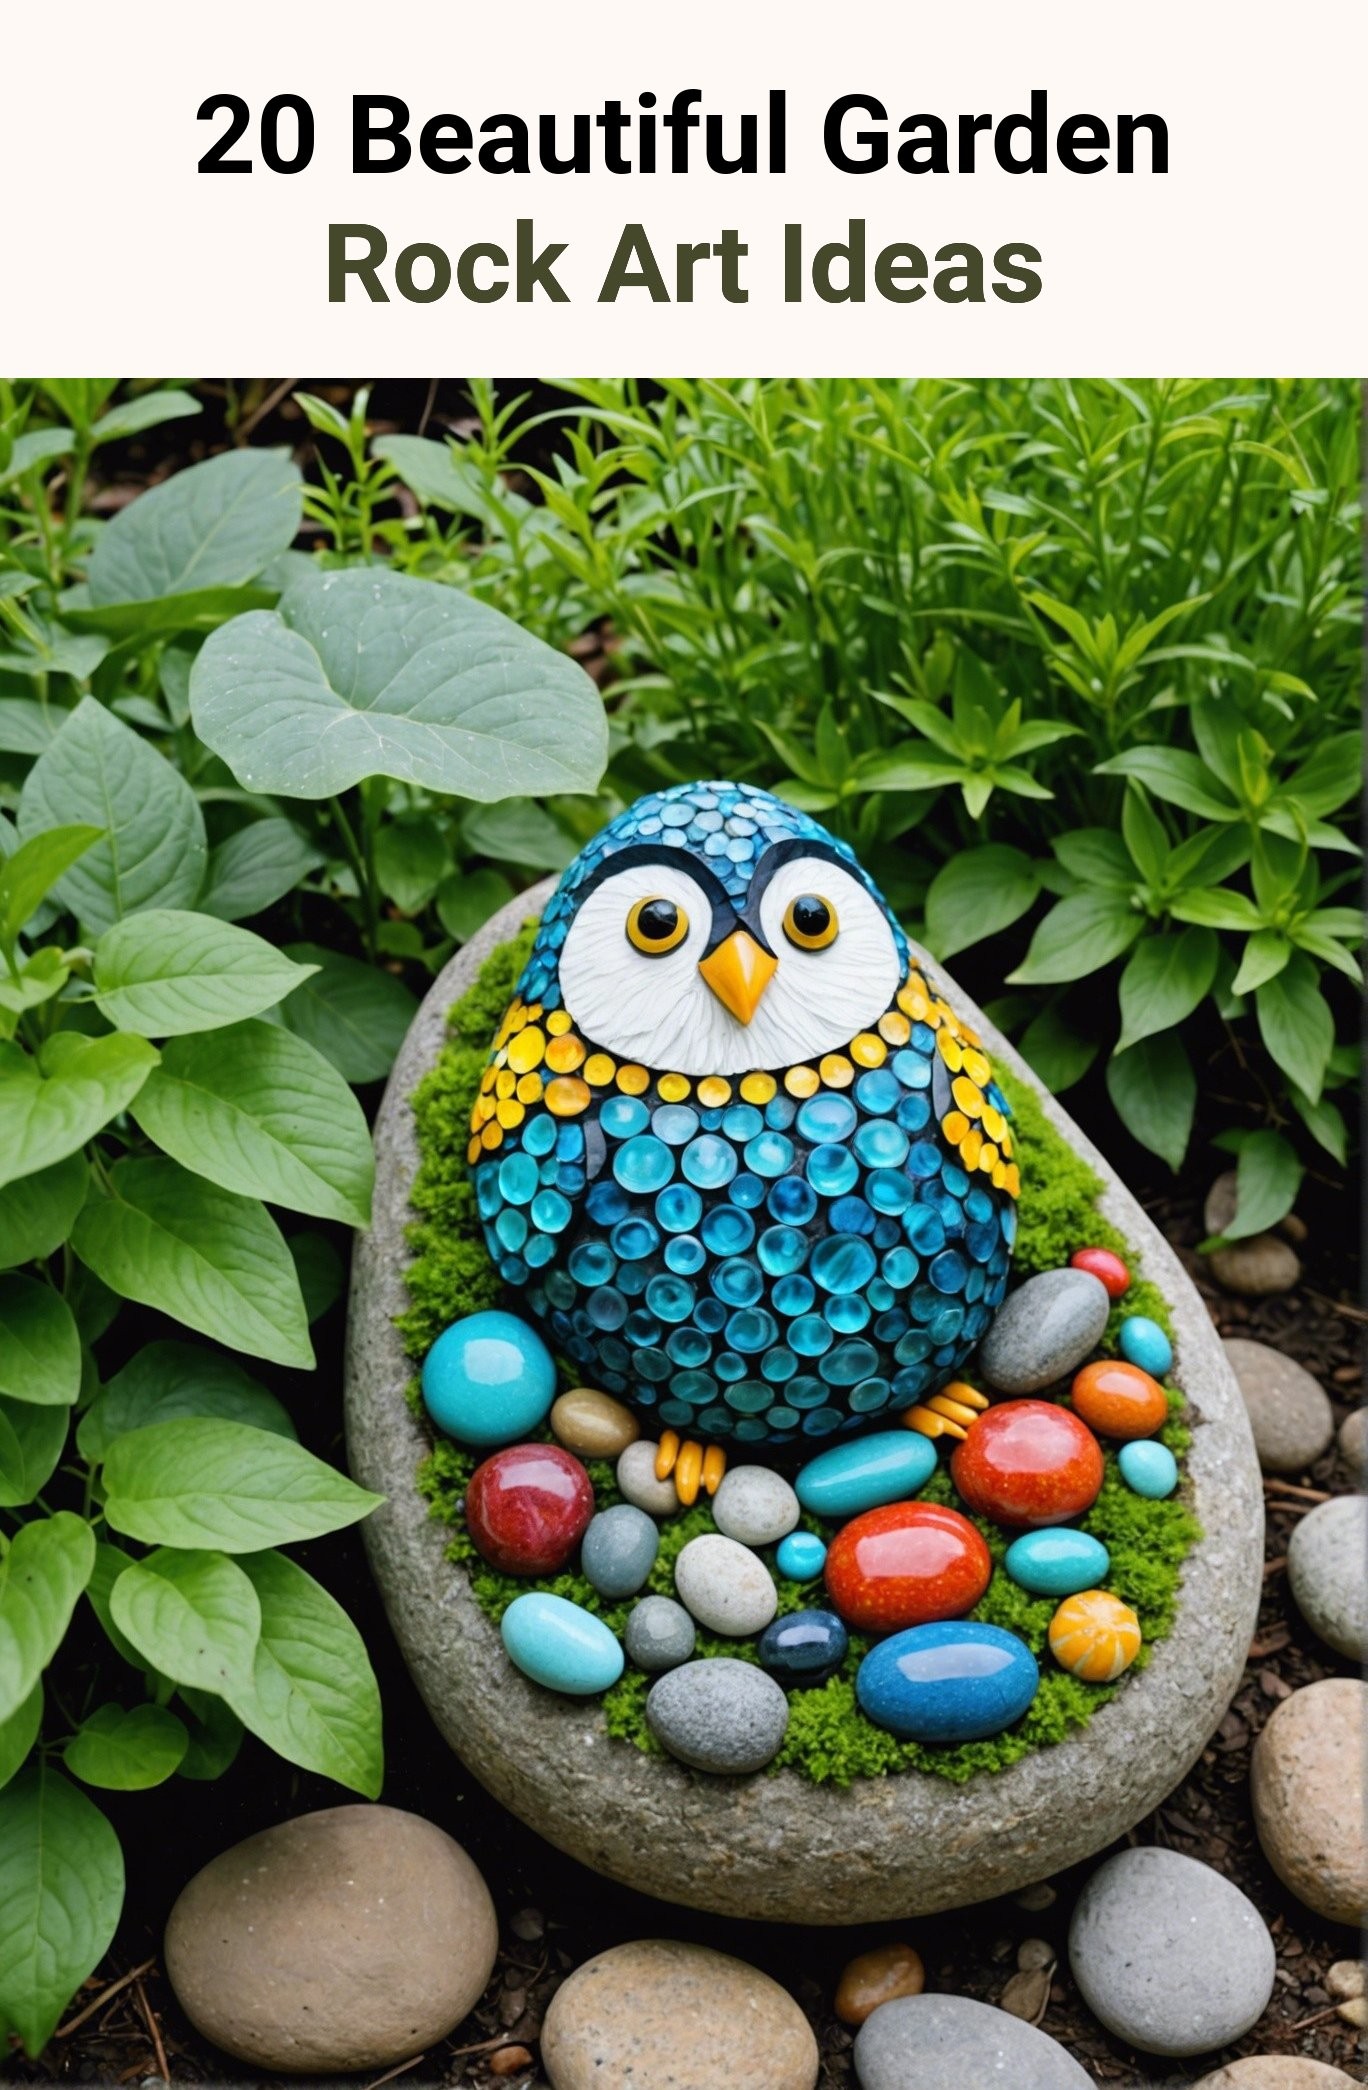 20 Beautiful Garden Rock Art Ideas